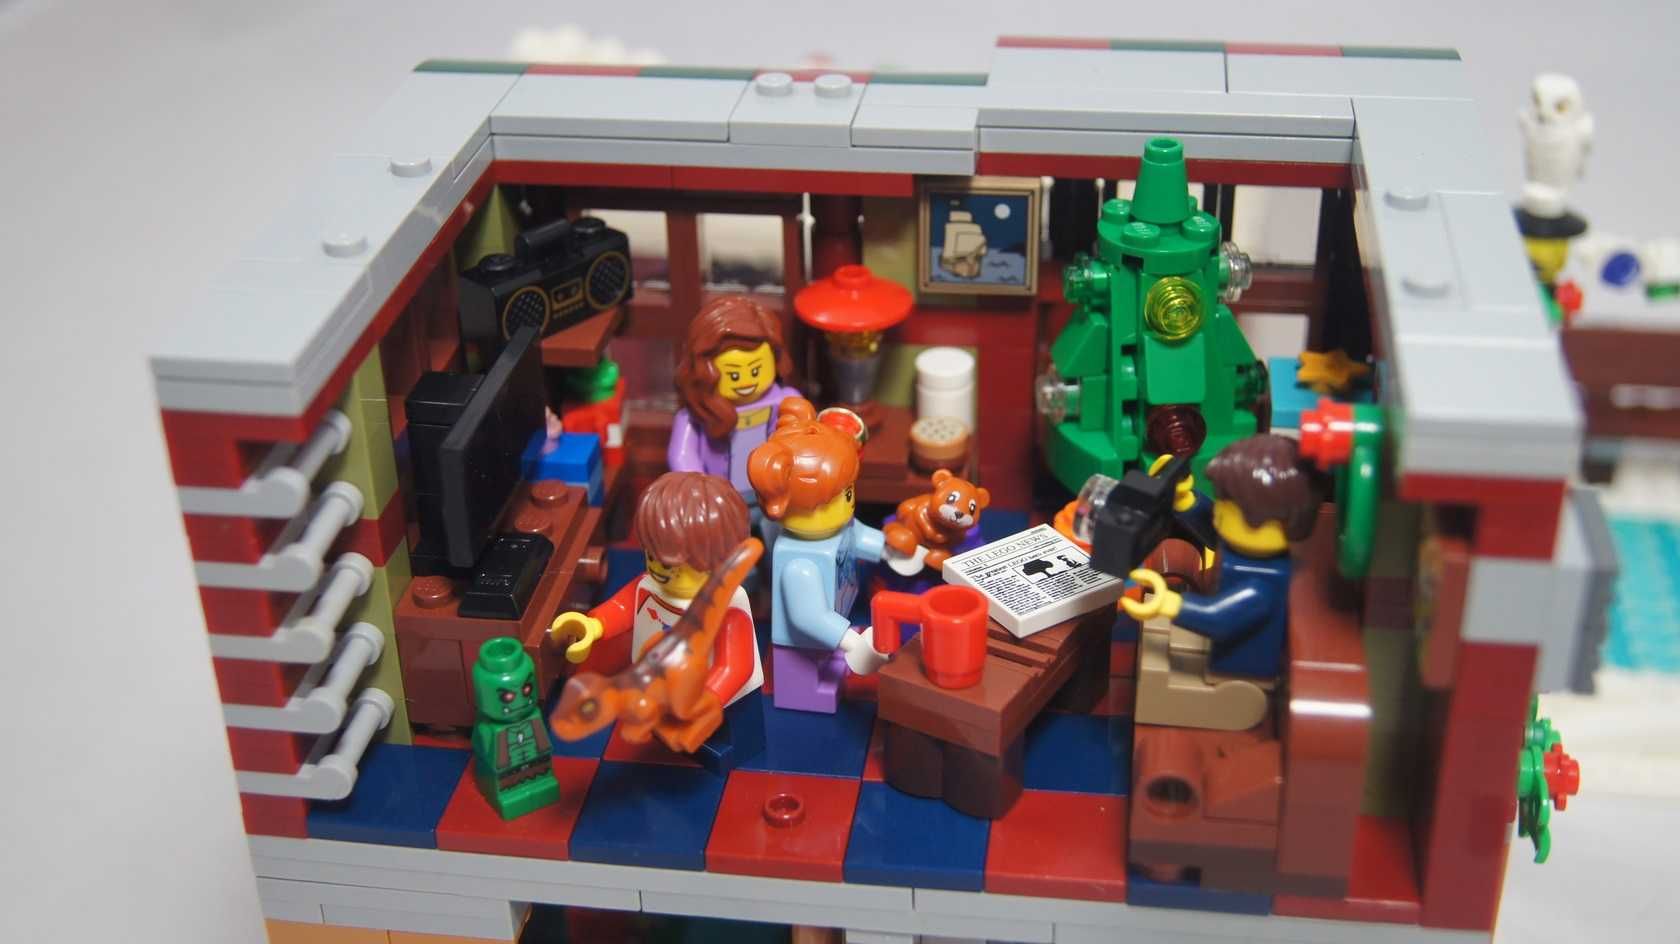 Lego MOC Winter Village Piekarnia makieta Święta